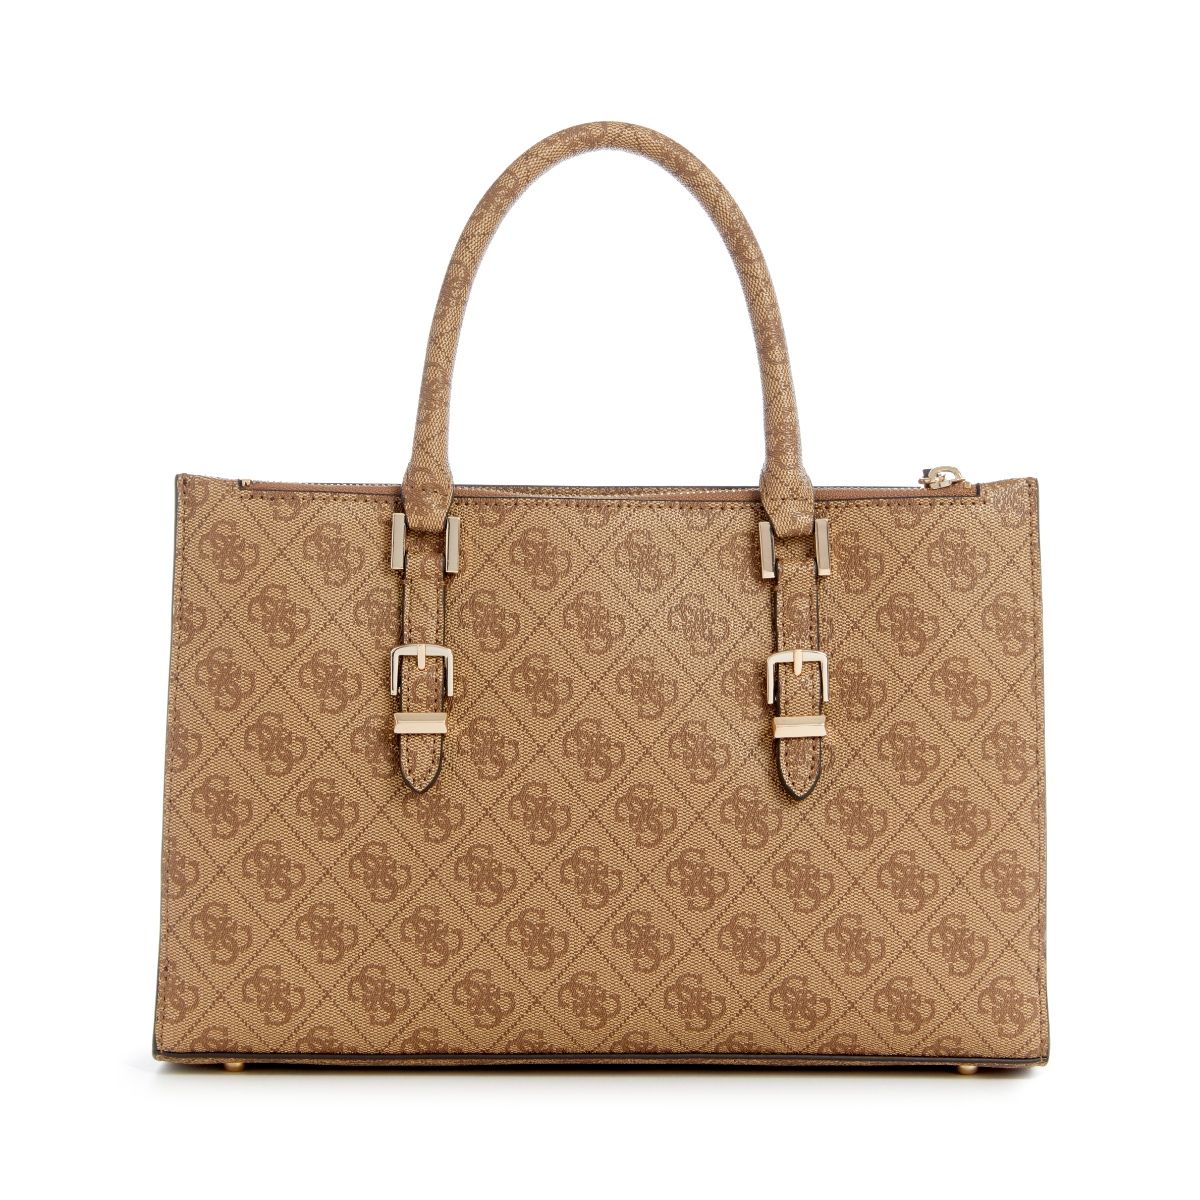 GUESS Stassie Top Handle Small Flap Denim Satchel | Bags, Guess purses,  Guess handbags